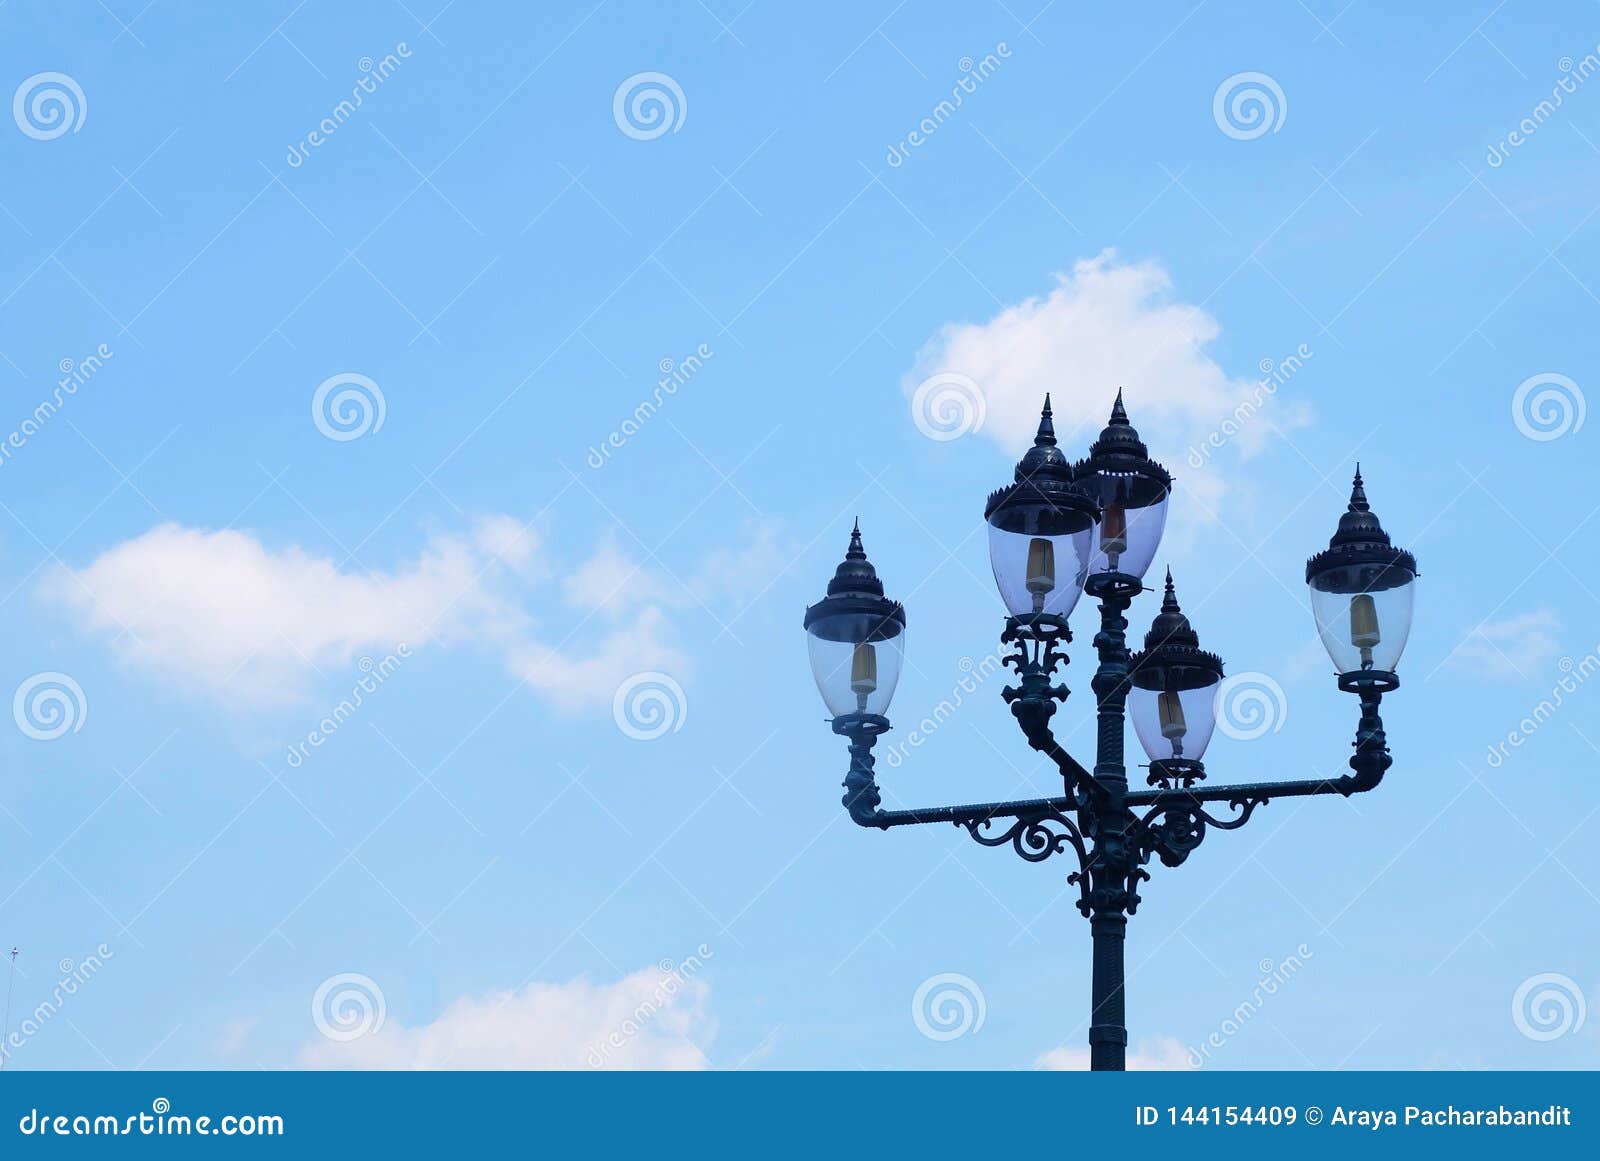 Decorative Lamp Posts At The Grand Palace Thailand Stock Image